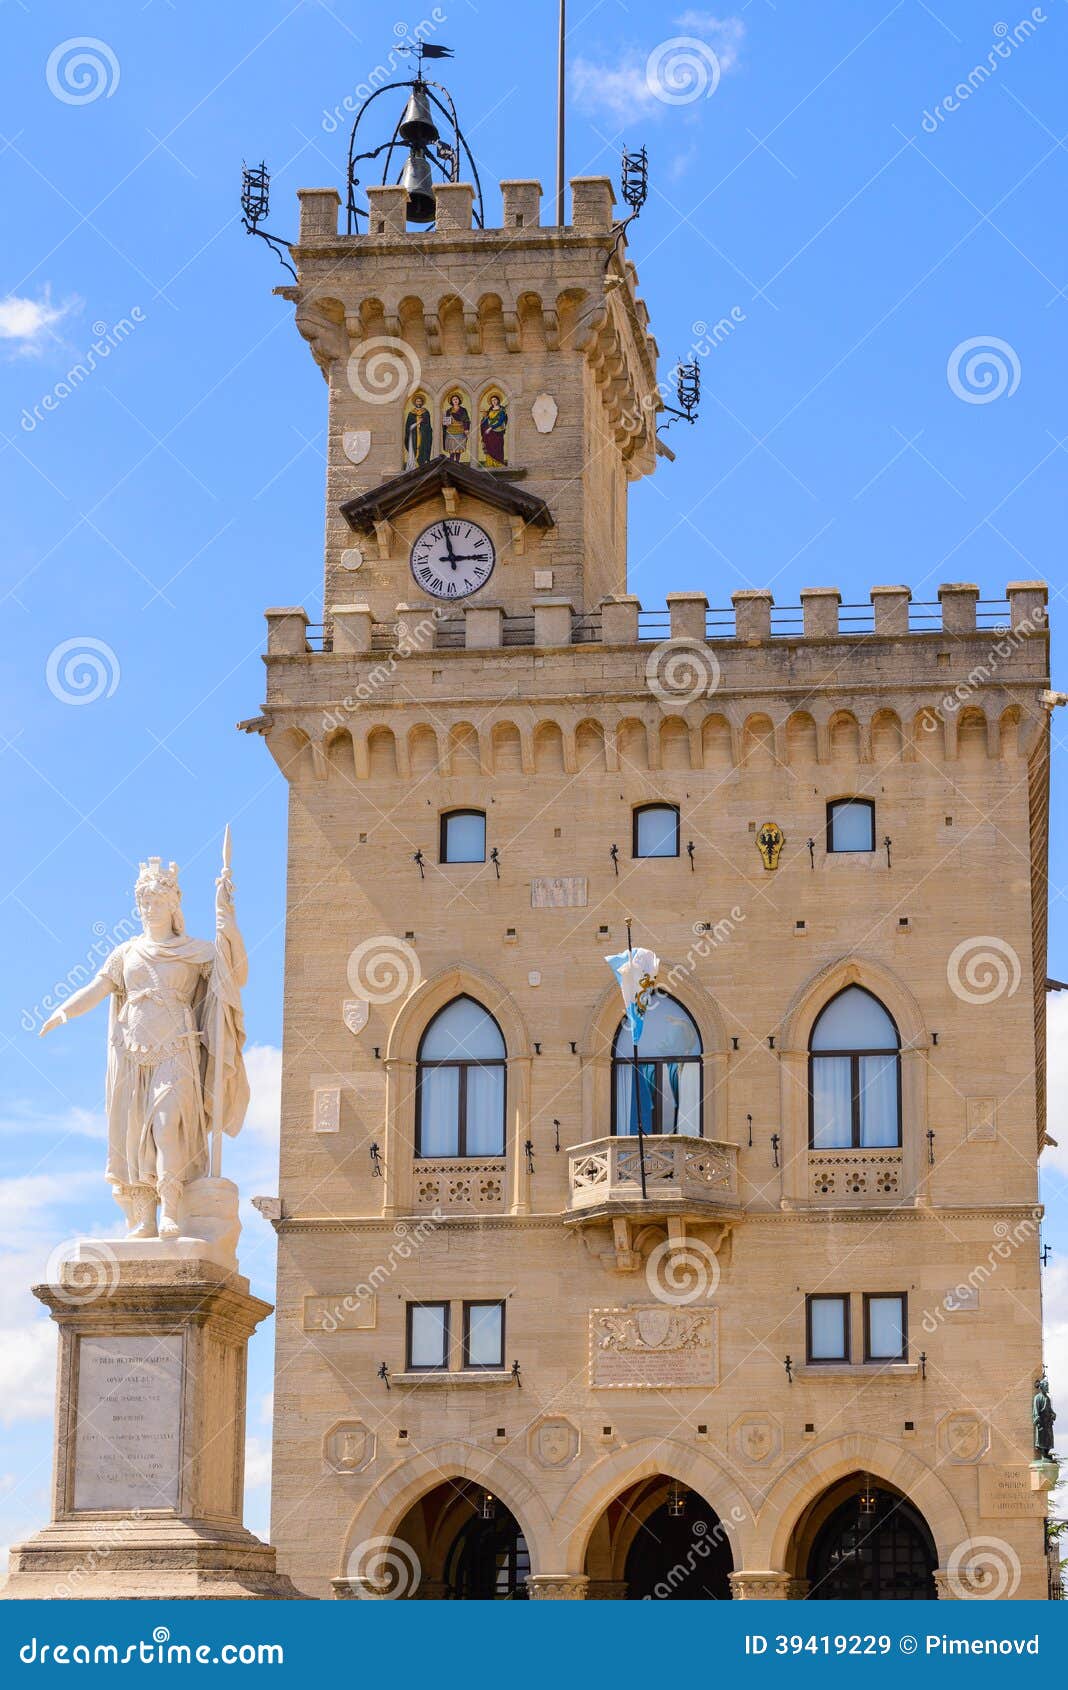 liberty statue and public palace, san marino republic, italy